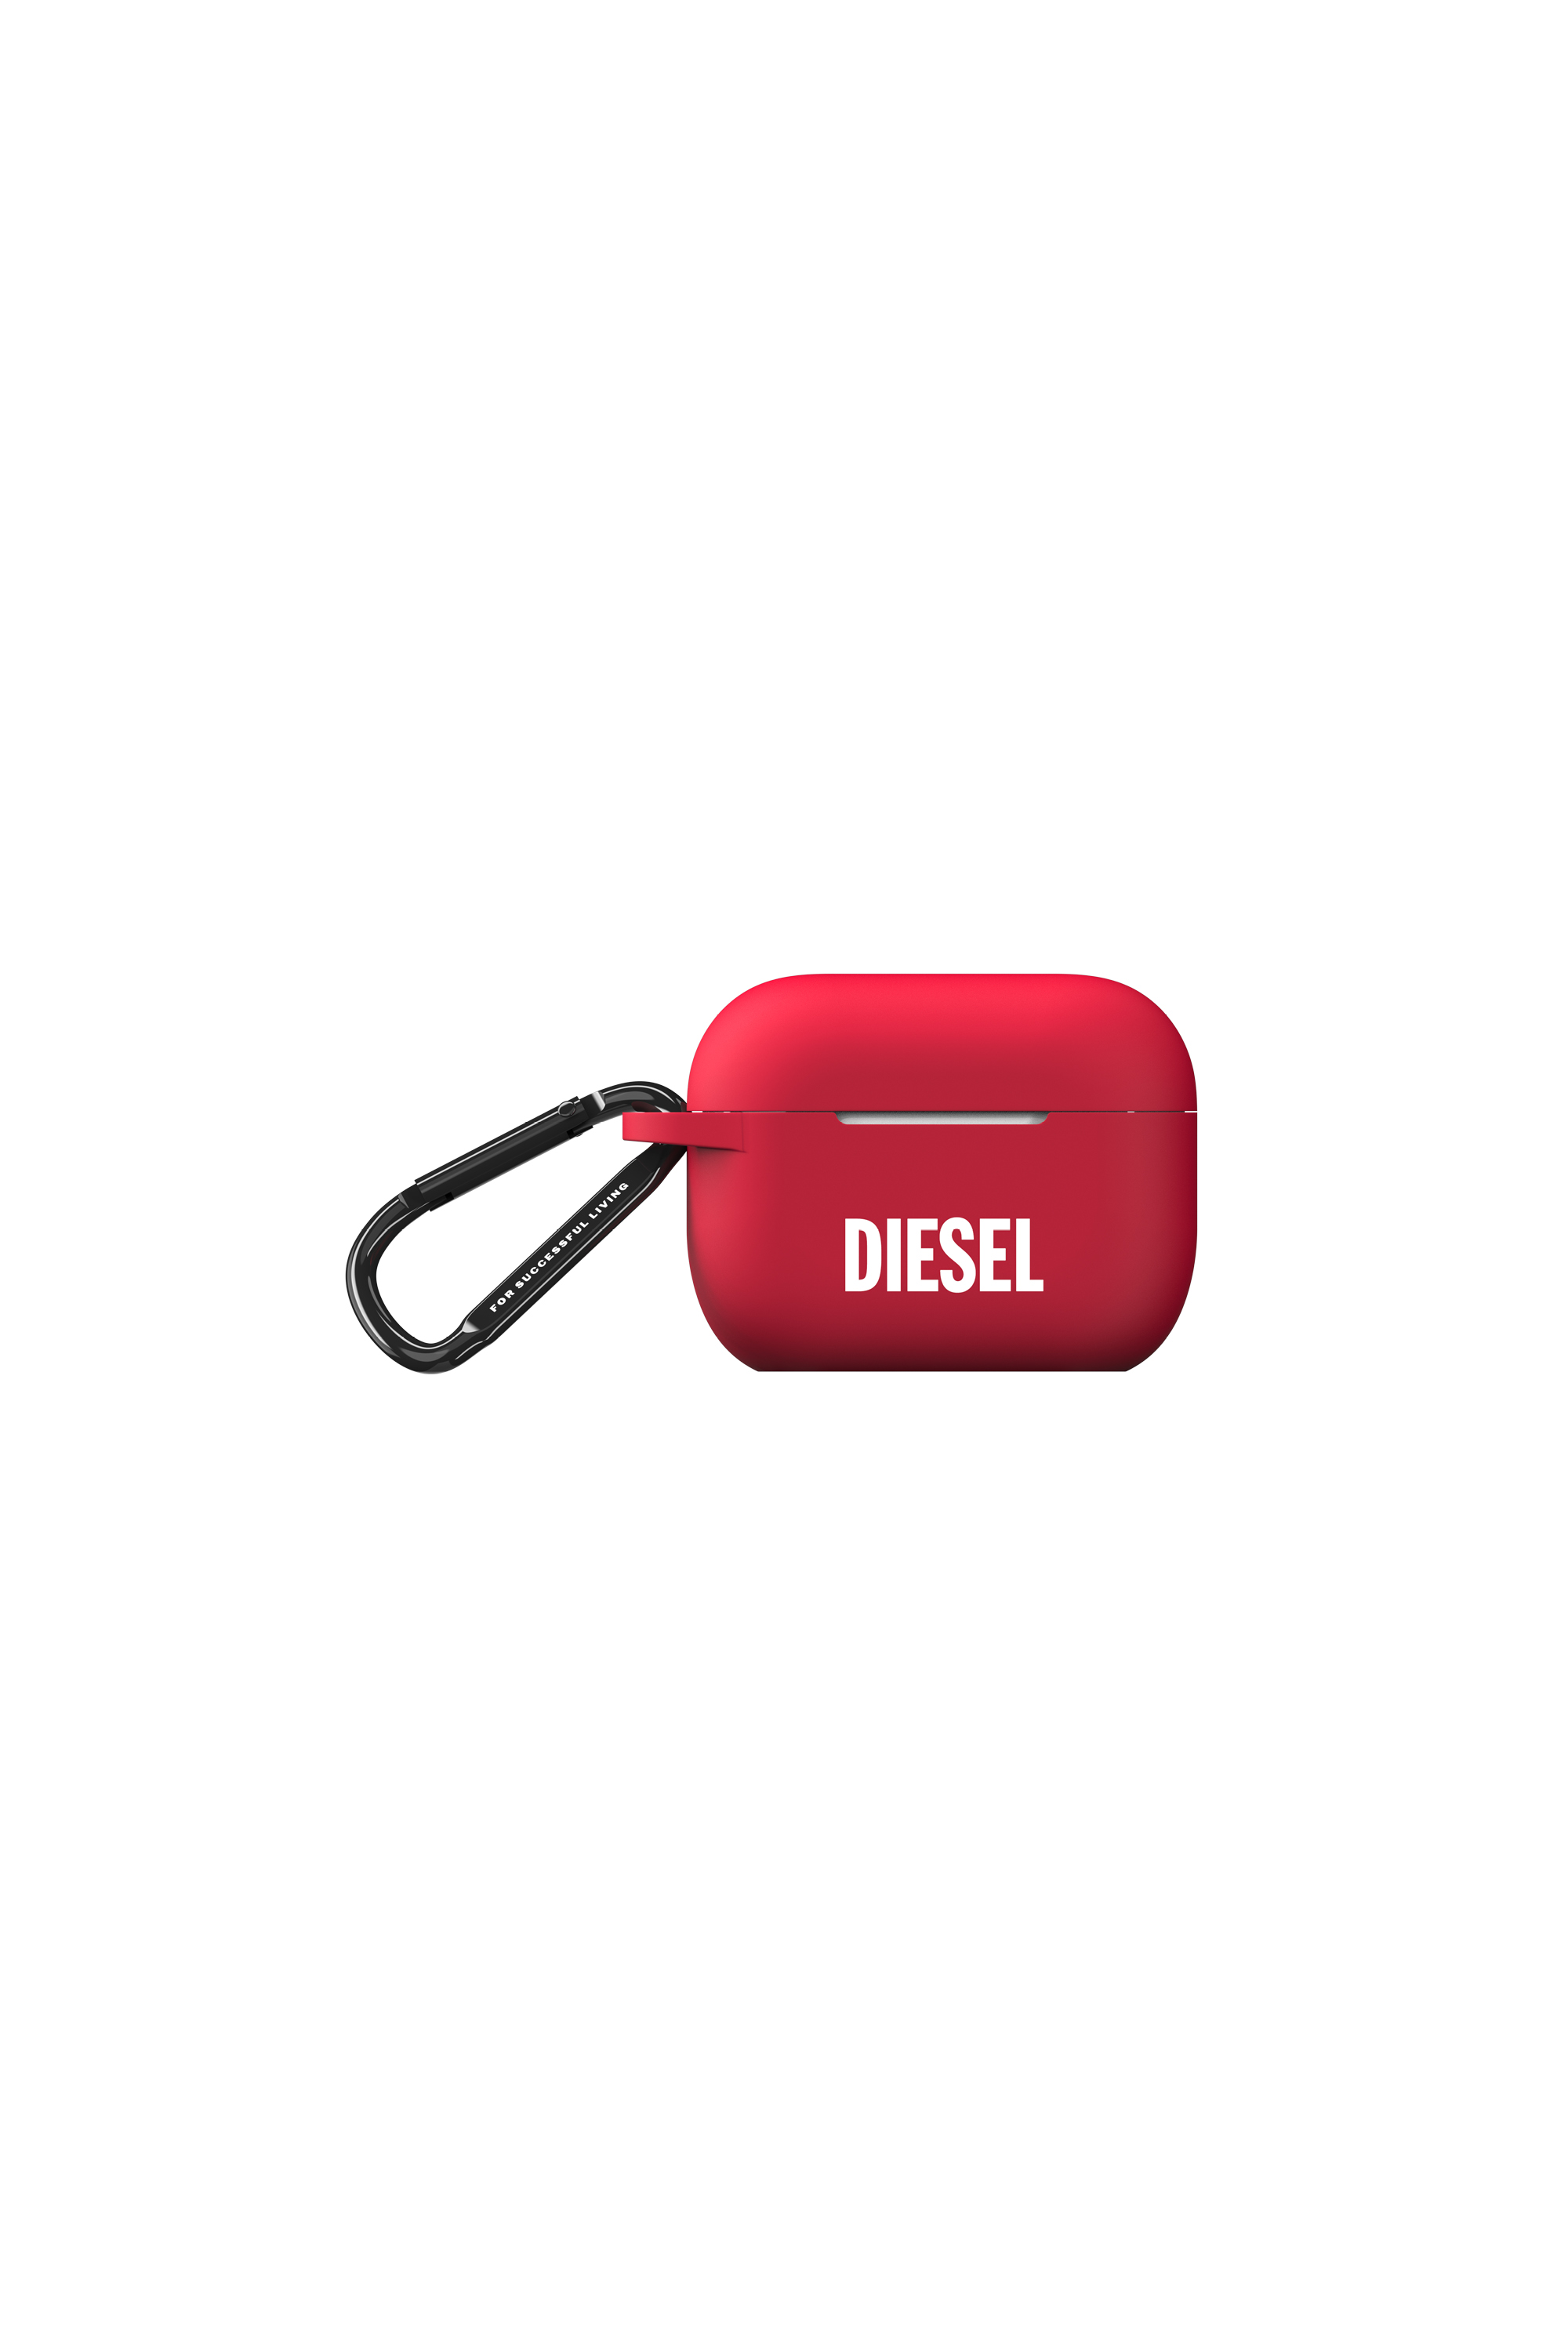 Diesel - 45837 AIRPOD CASE, Red - Image 1